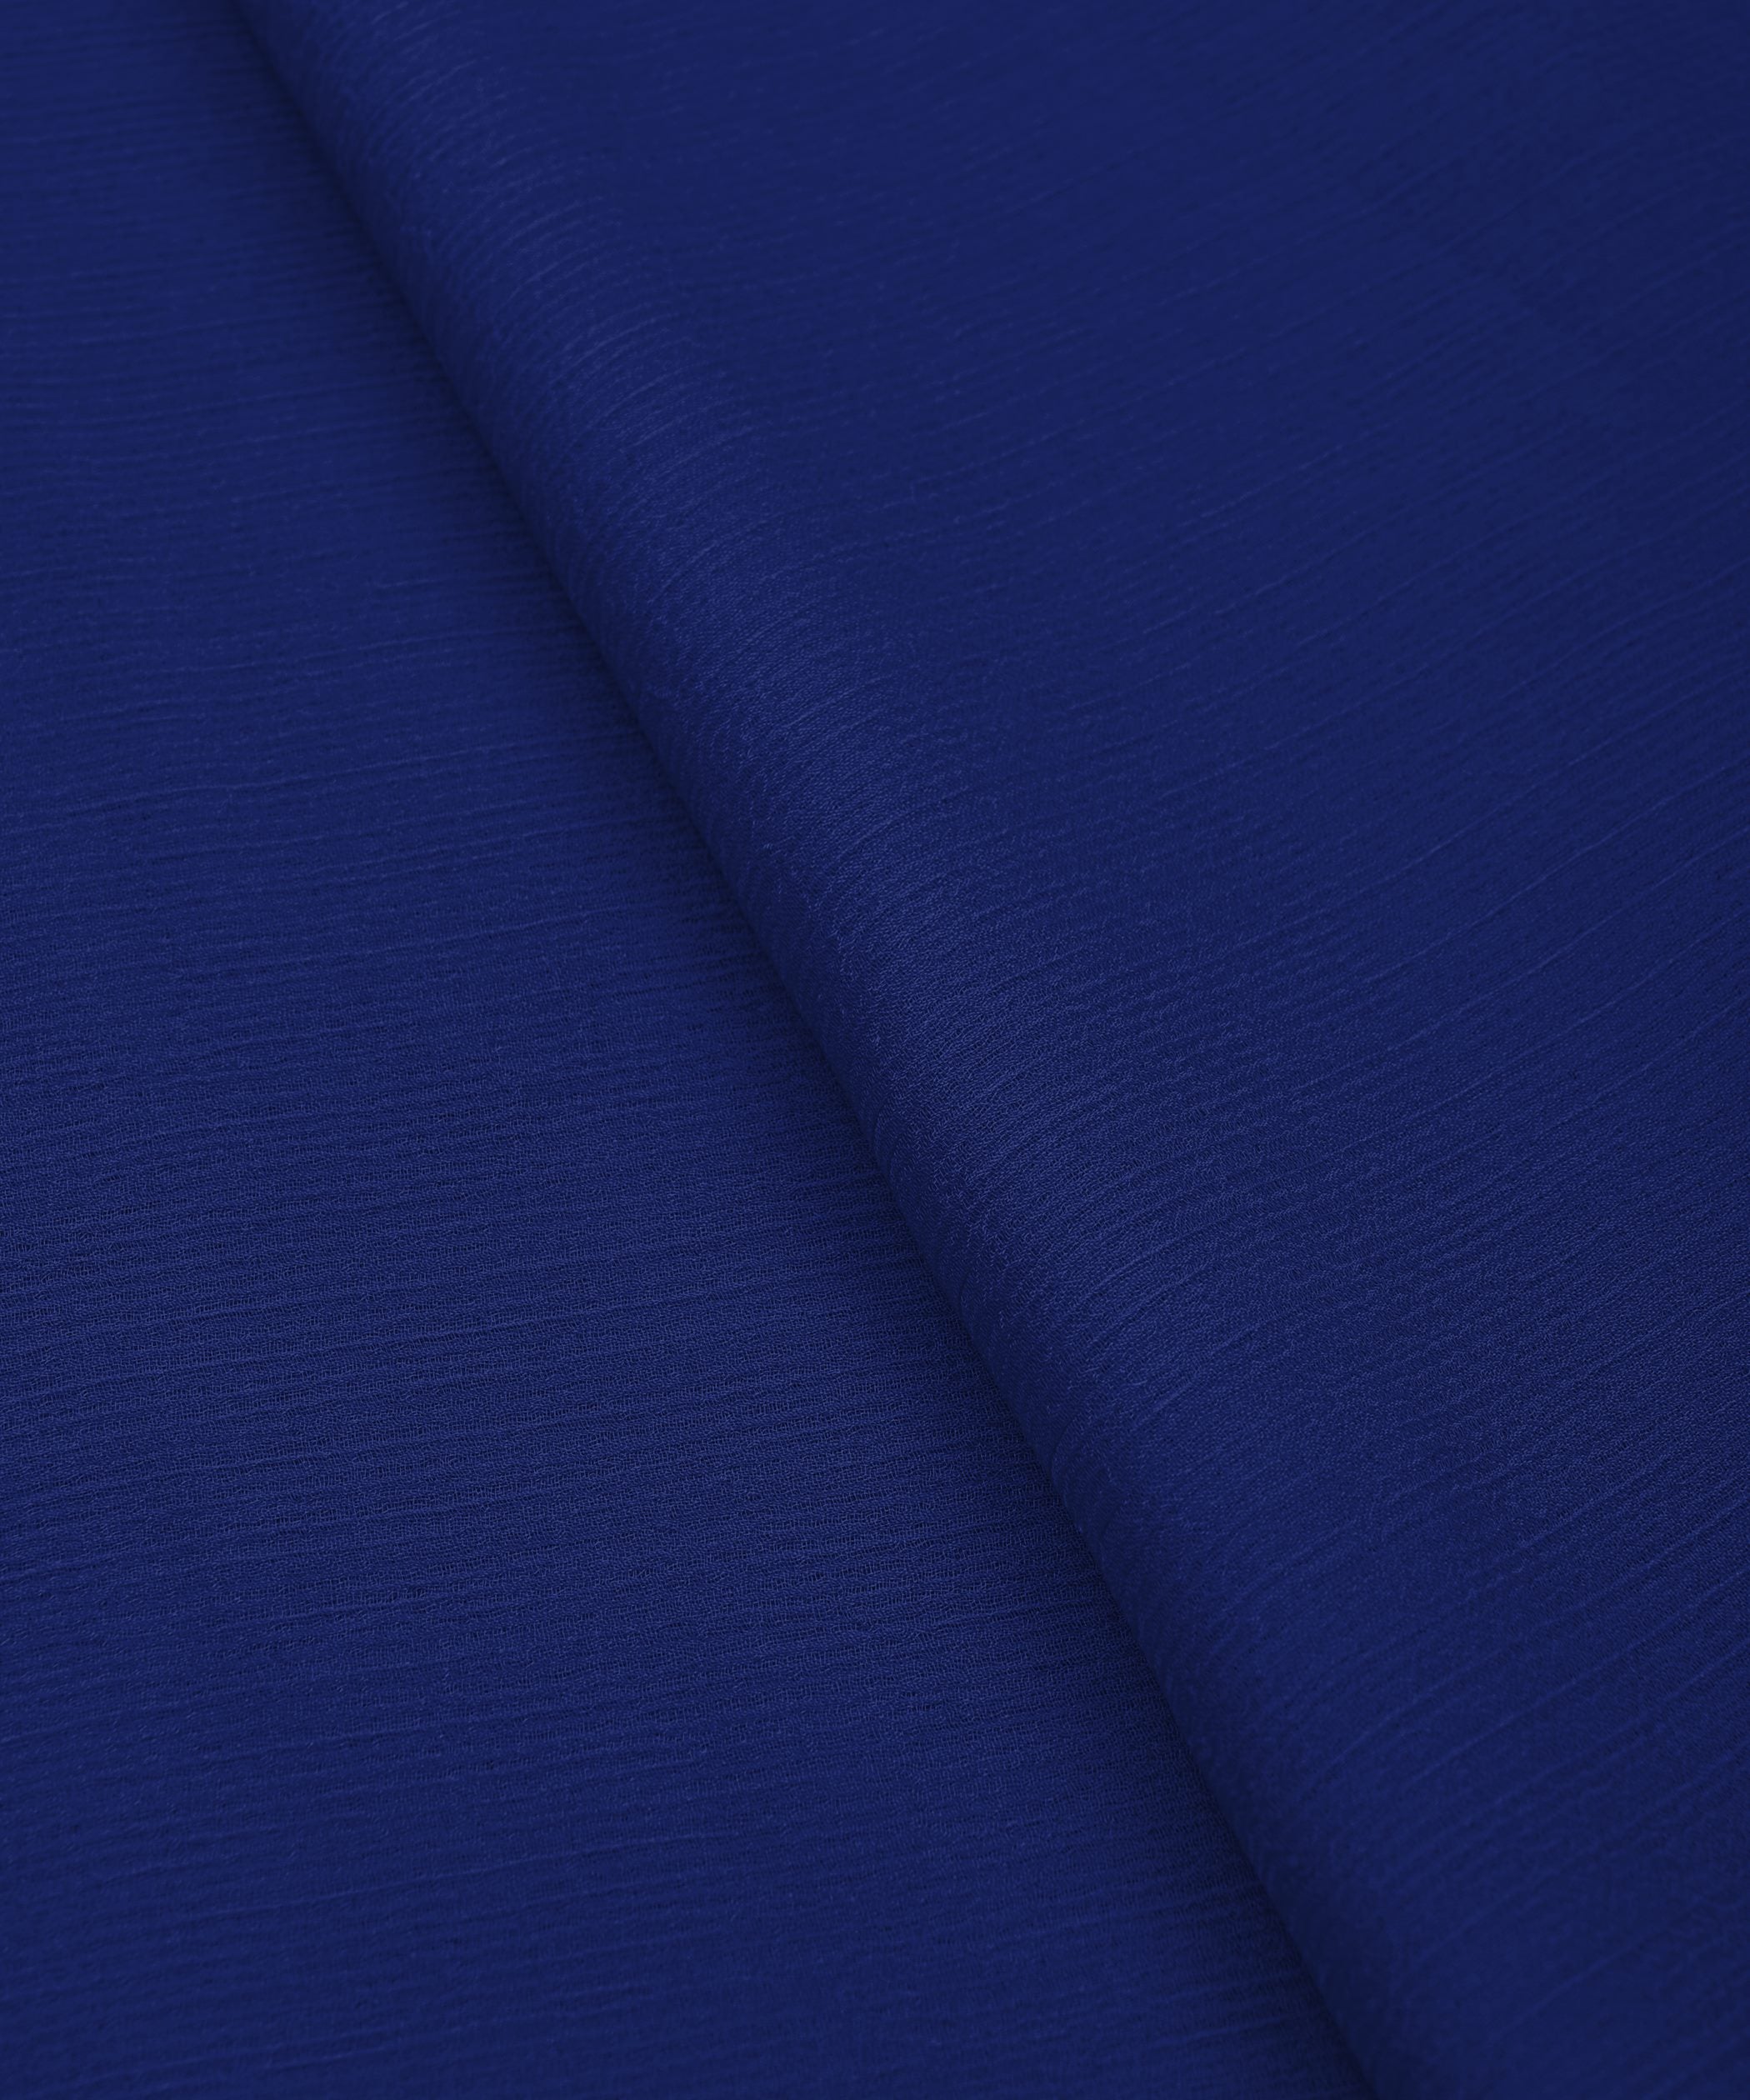 Navy Blue Plain Dyed Bemberg Chiffon Fabric